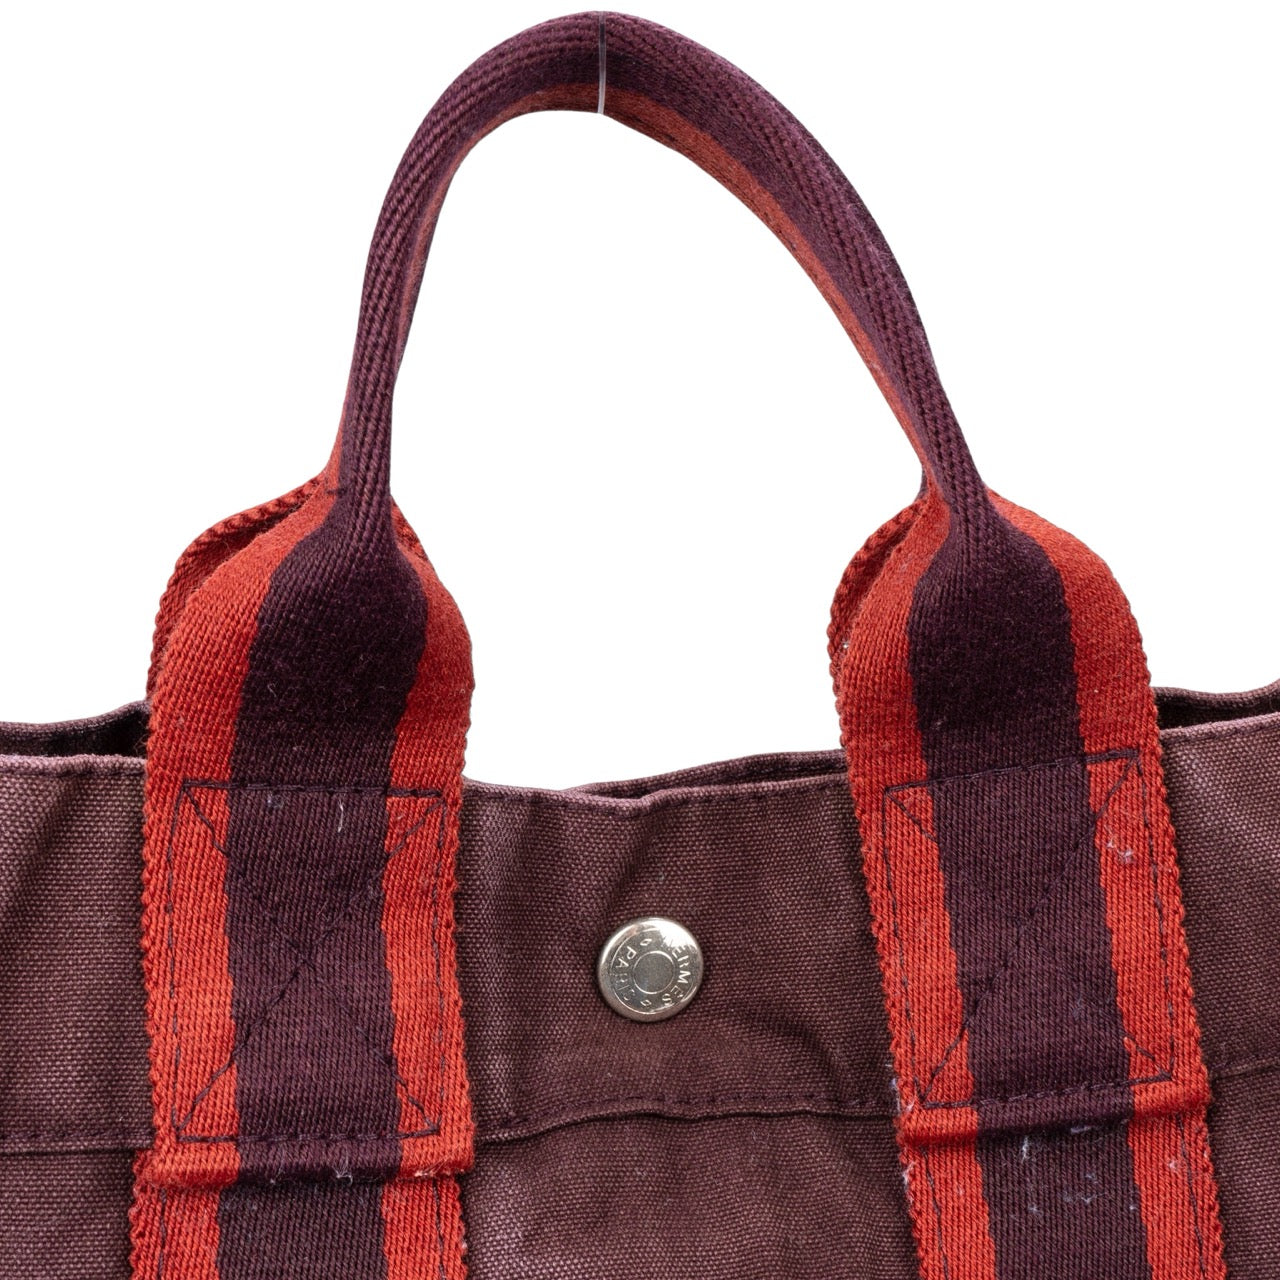 Hermes Cotton Mini Fourre Handbag